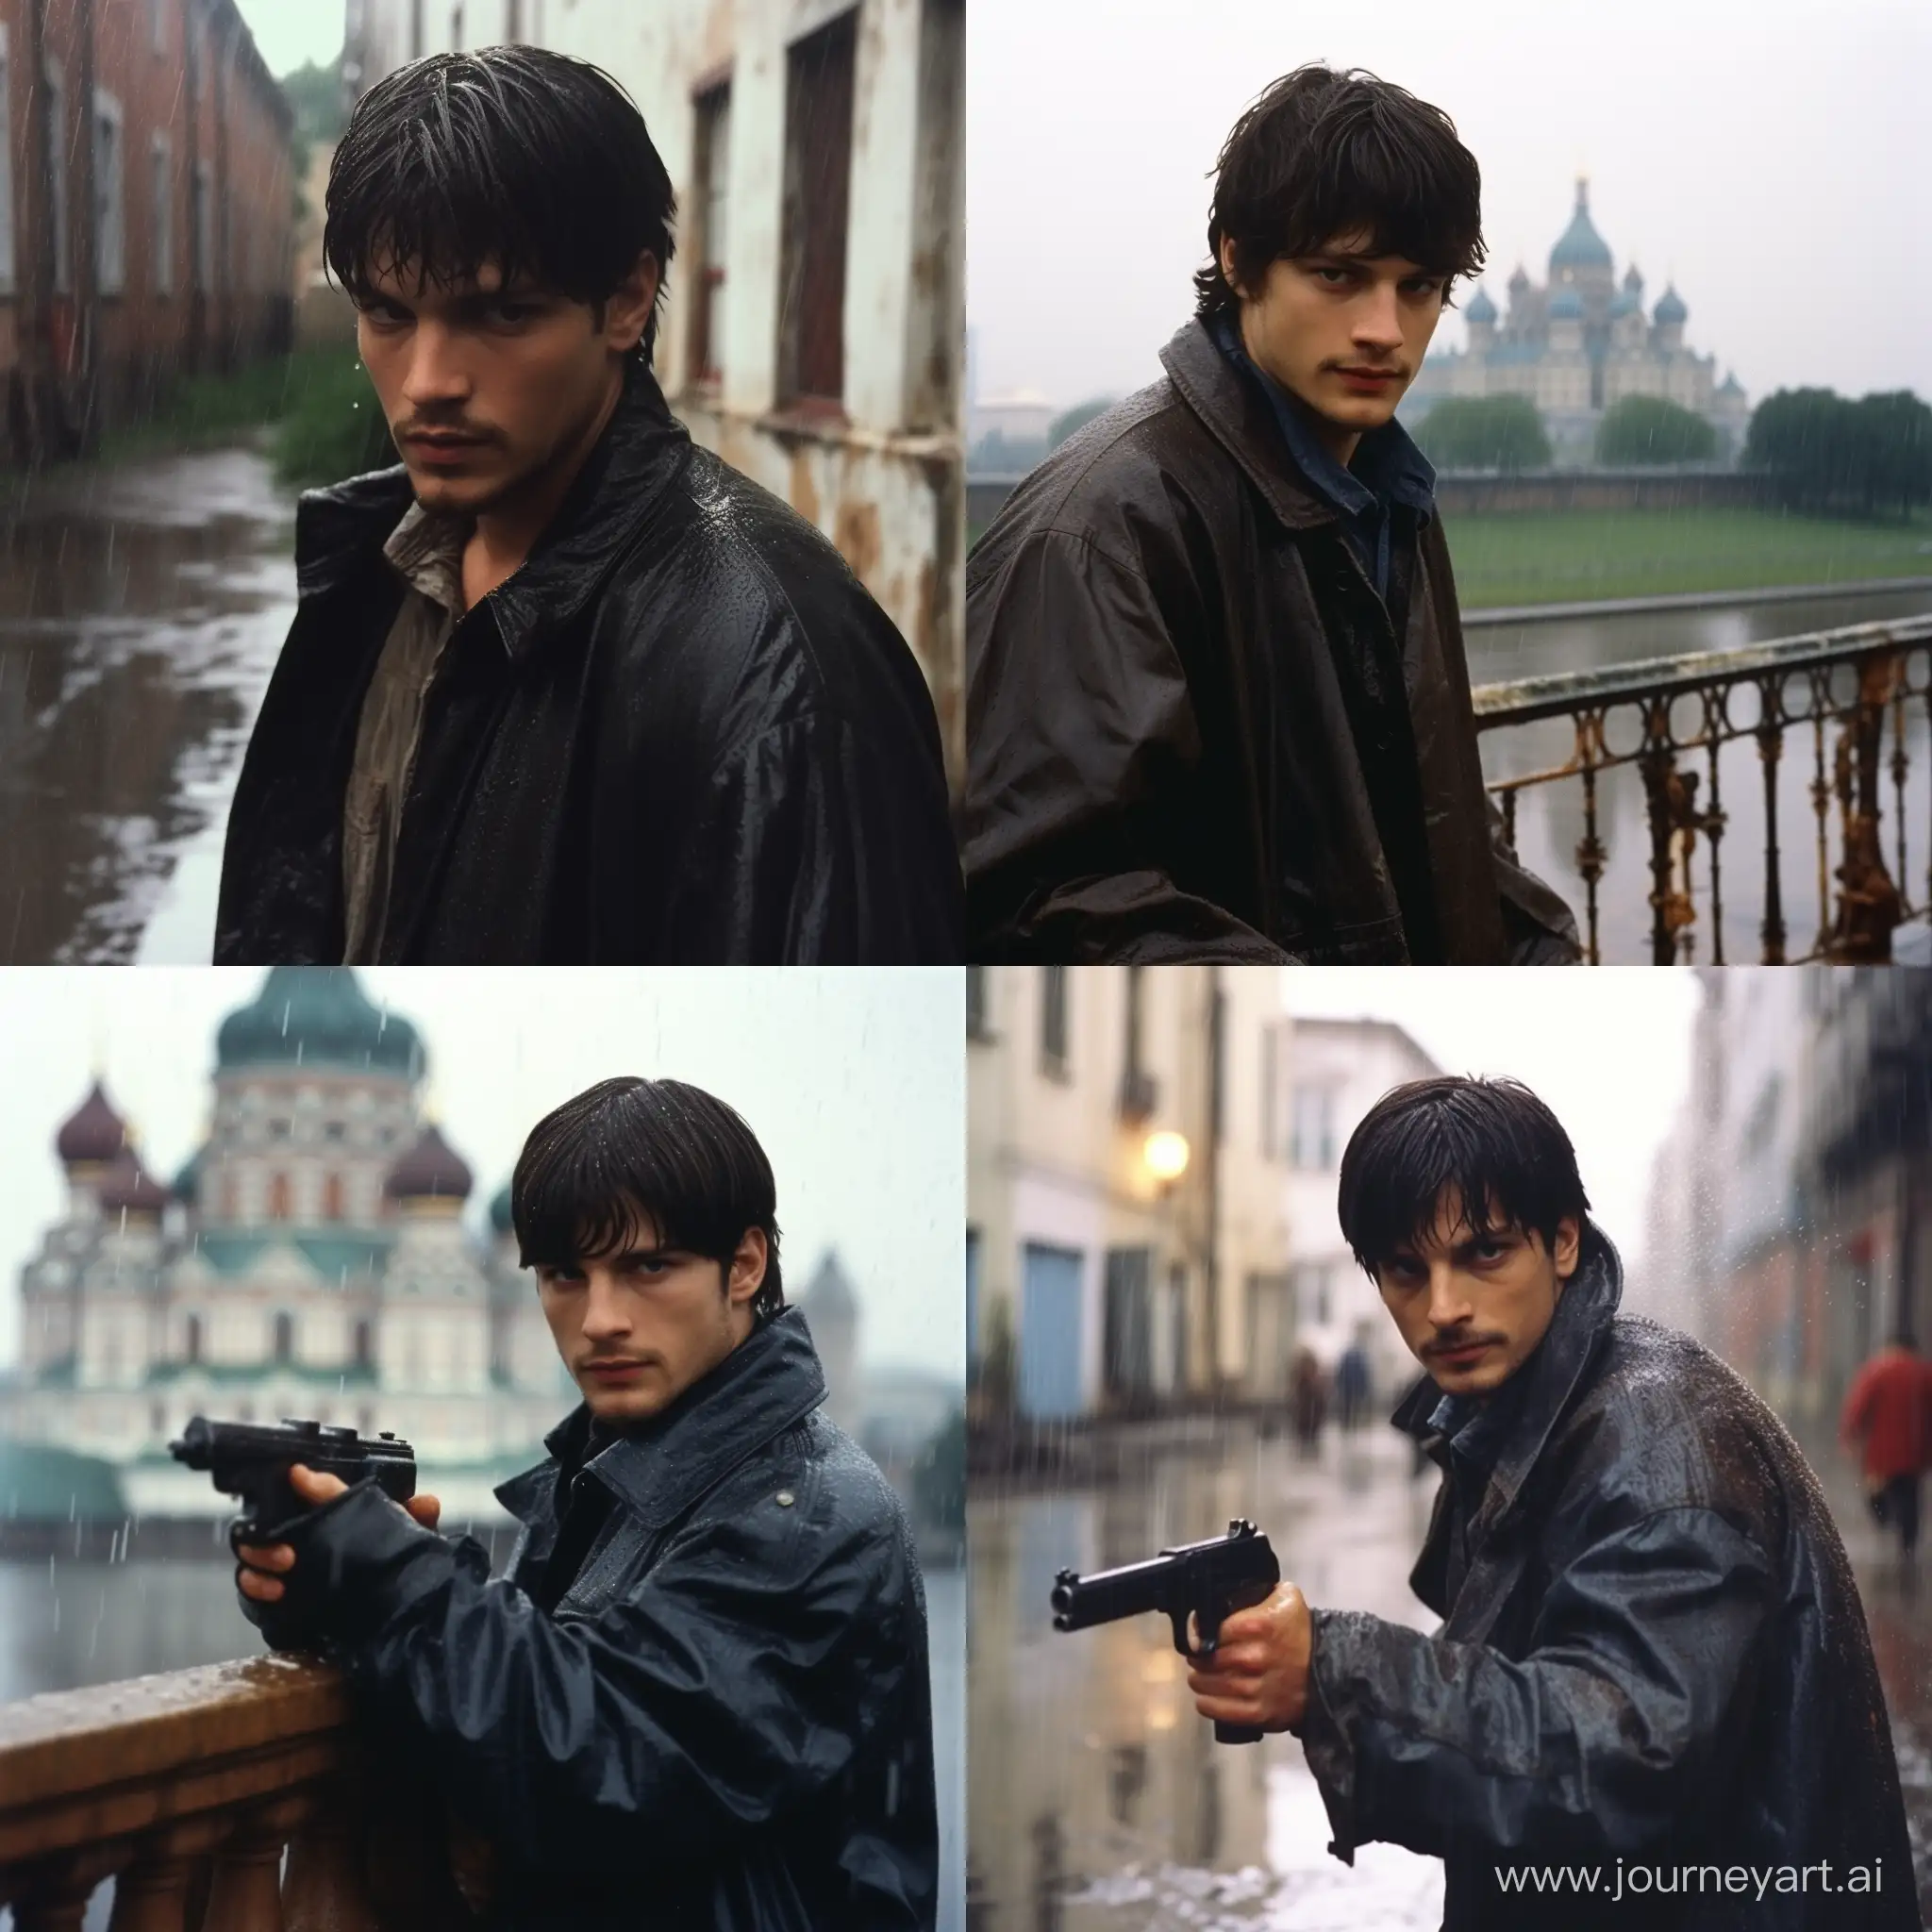 Ashton-Kutcher-Embraces-Nostalgia-in-St-Petersburg-Rain-Capturing-1990s-Moody-Atmosphere